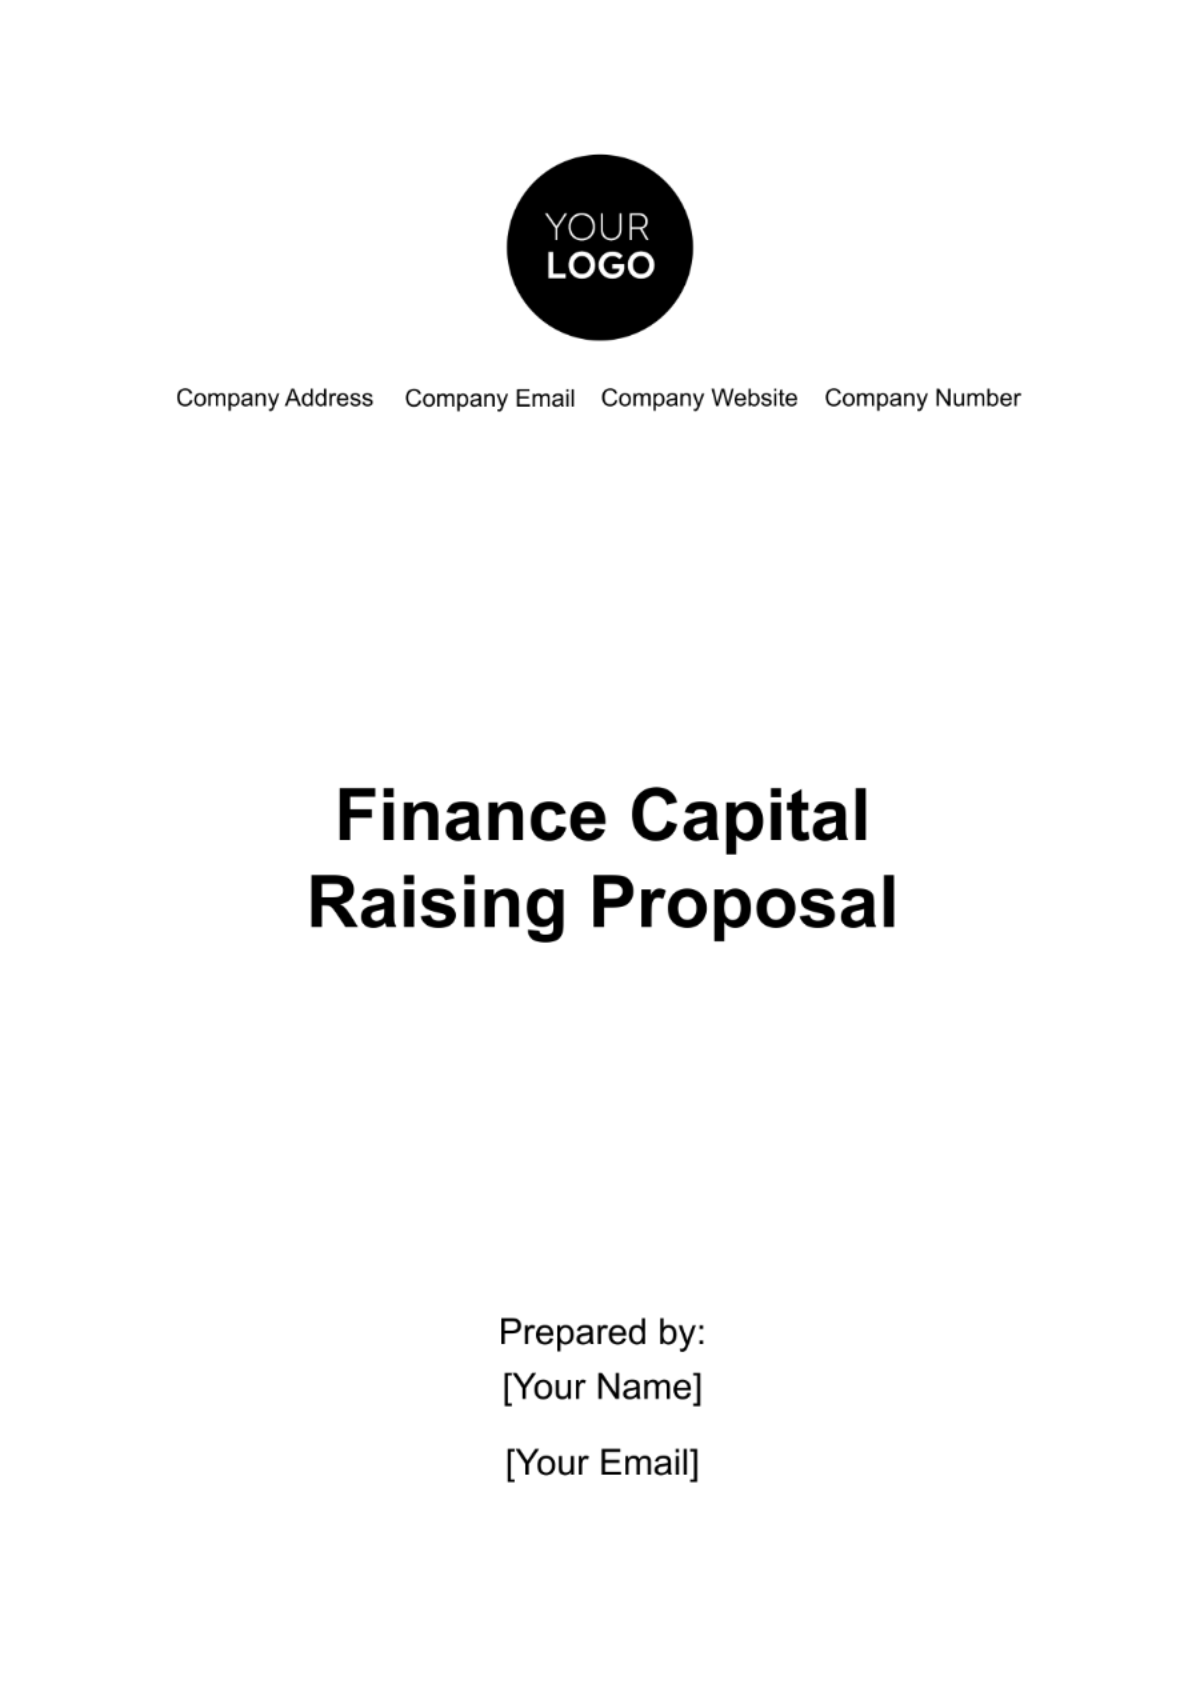 Finance Capital Raising Proposal Template